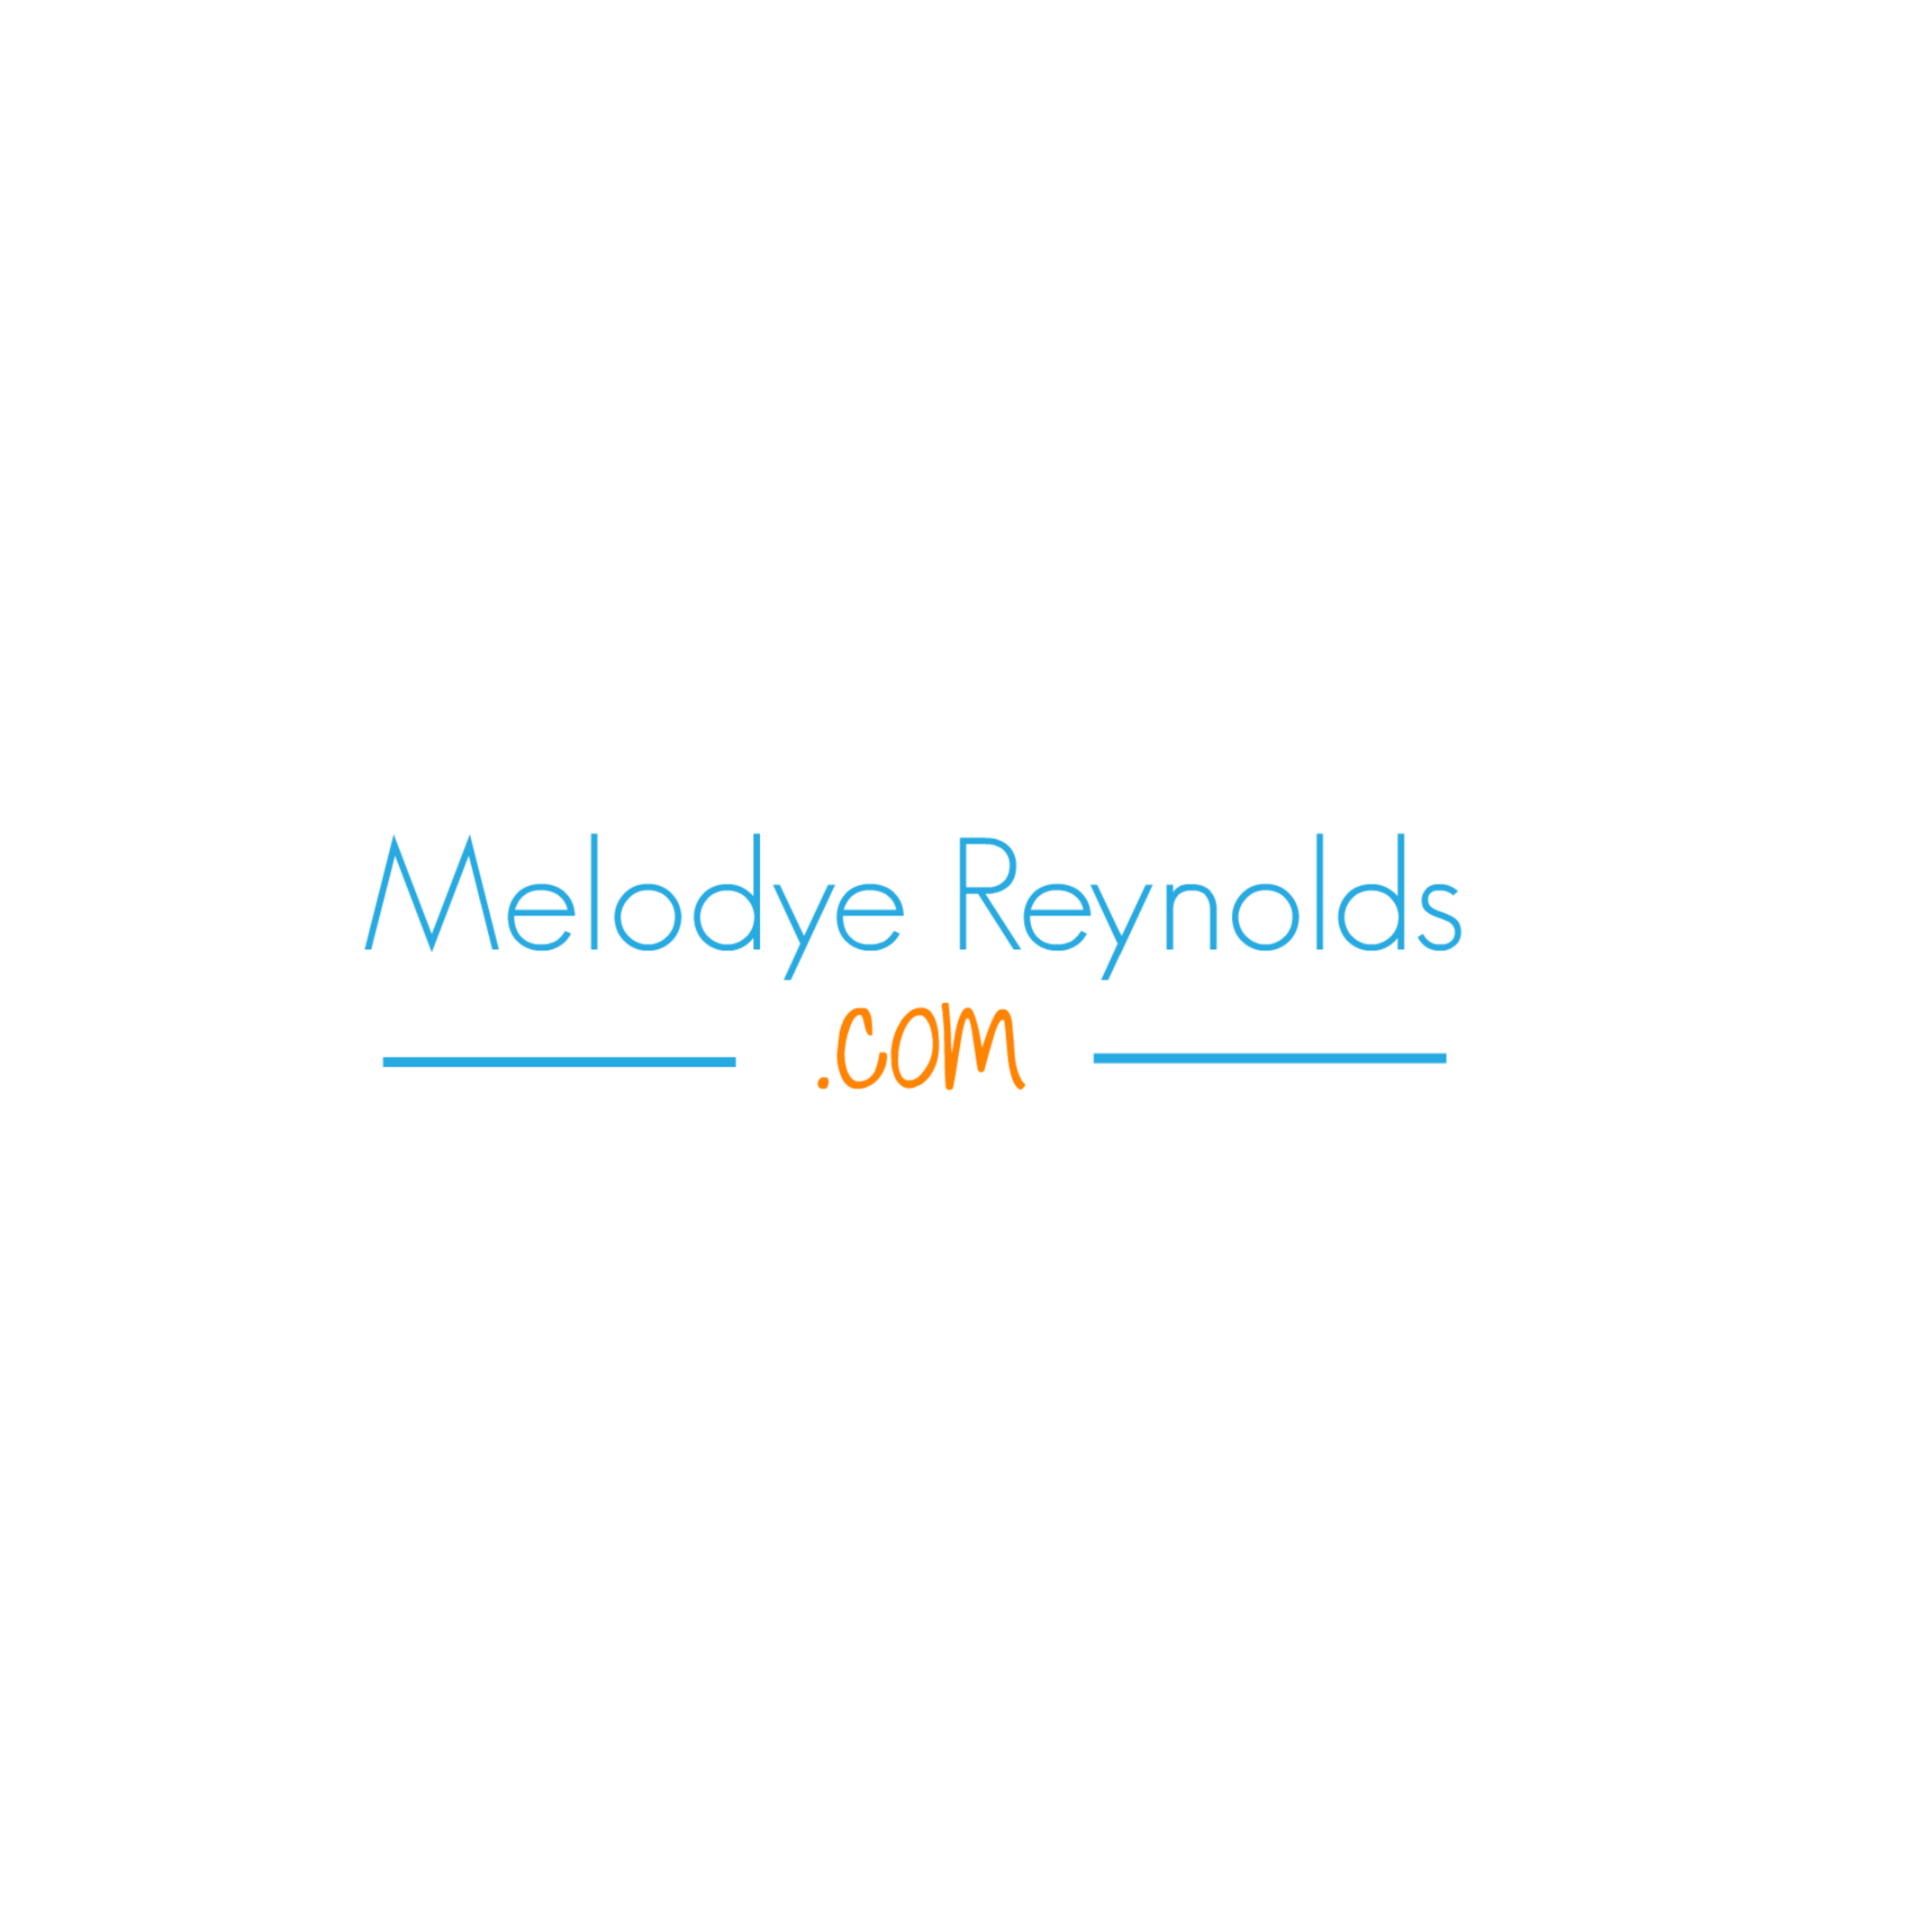 Melodye Reynolds